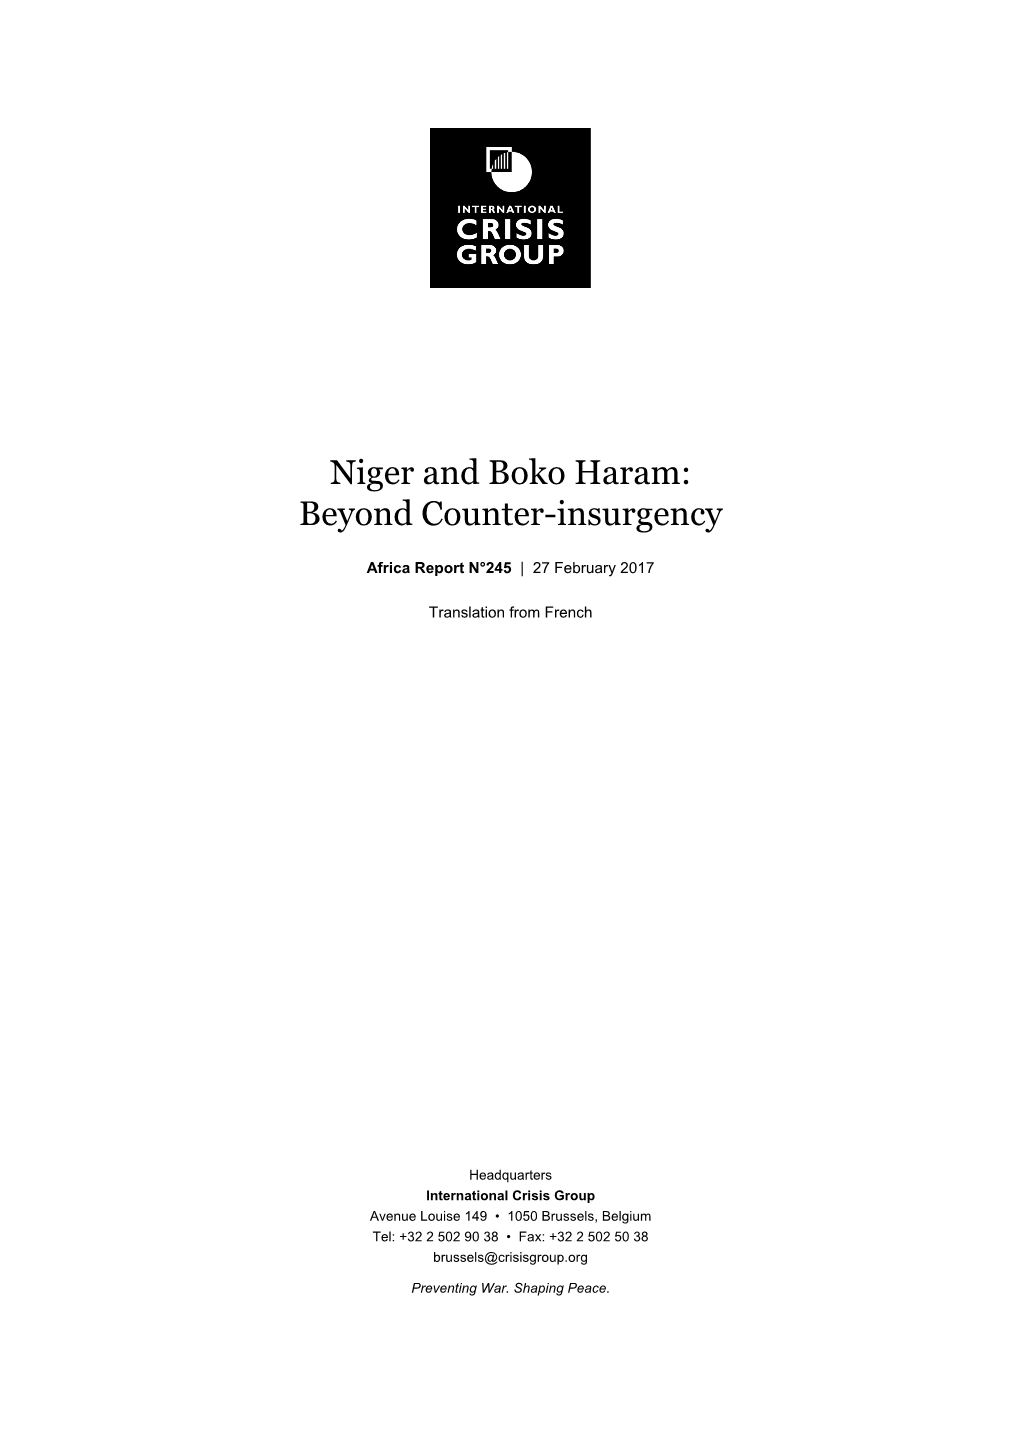 Niger and Boko Haram Beyond Counter-Insurgency